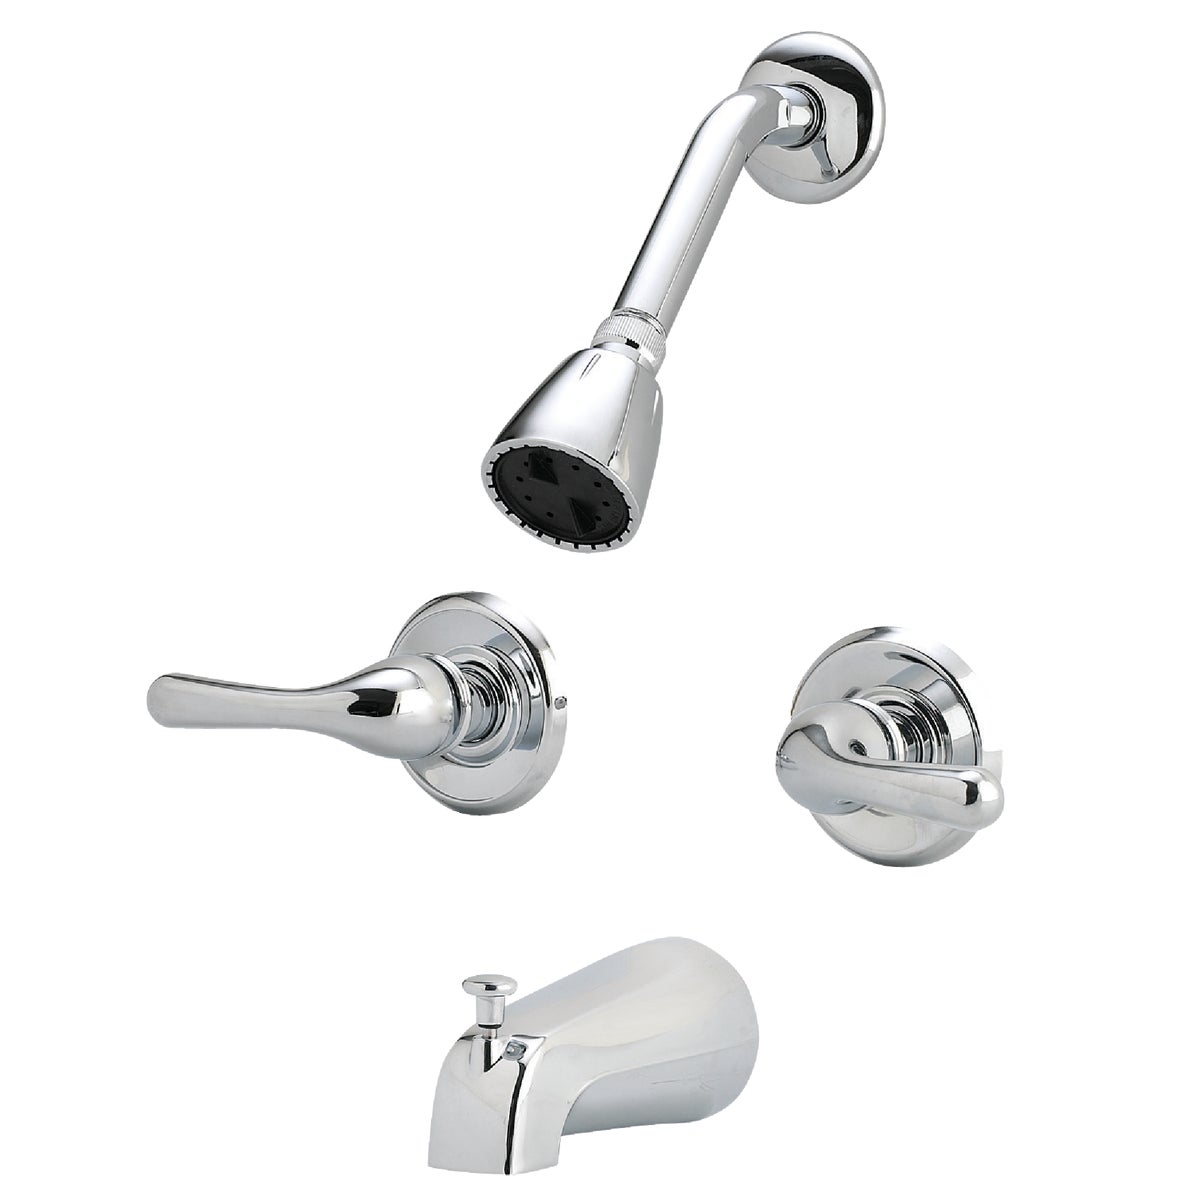 Home Impressions Chrome 2-Handle Metal Lever Tub & Shower Faucet